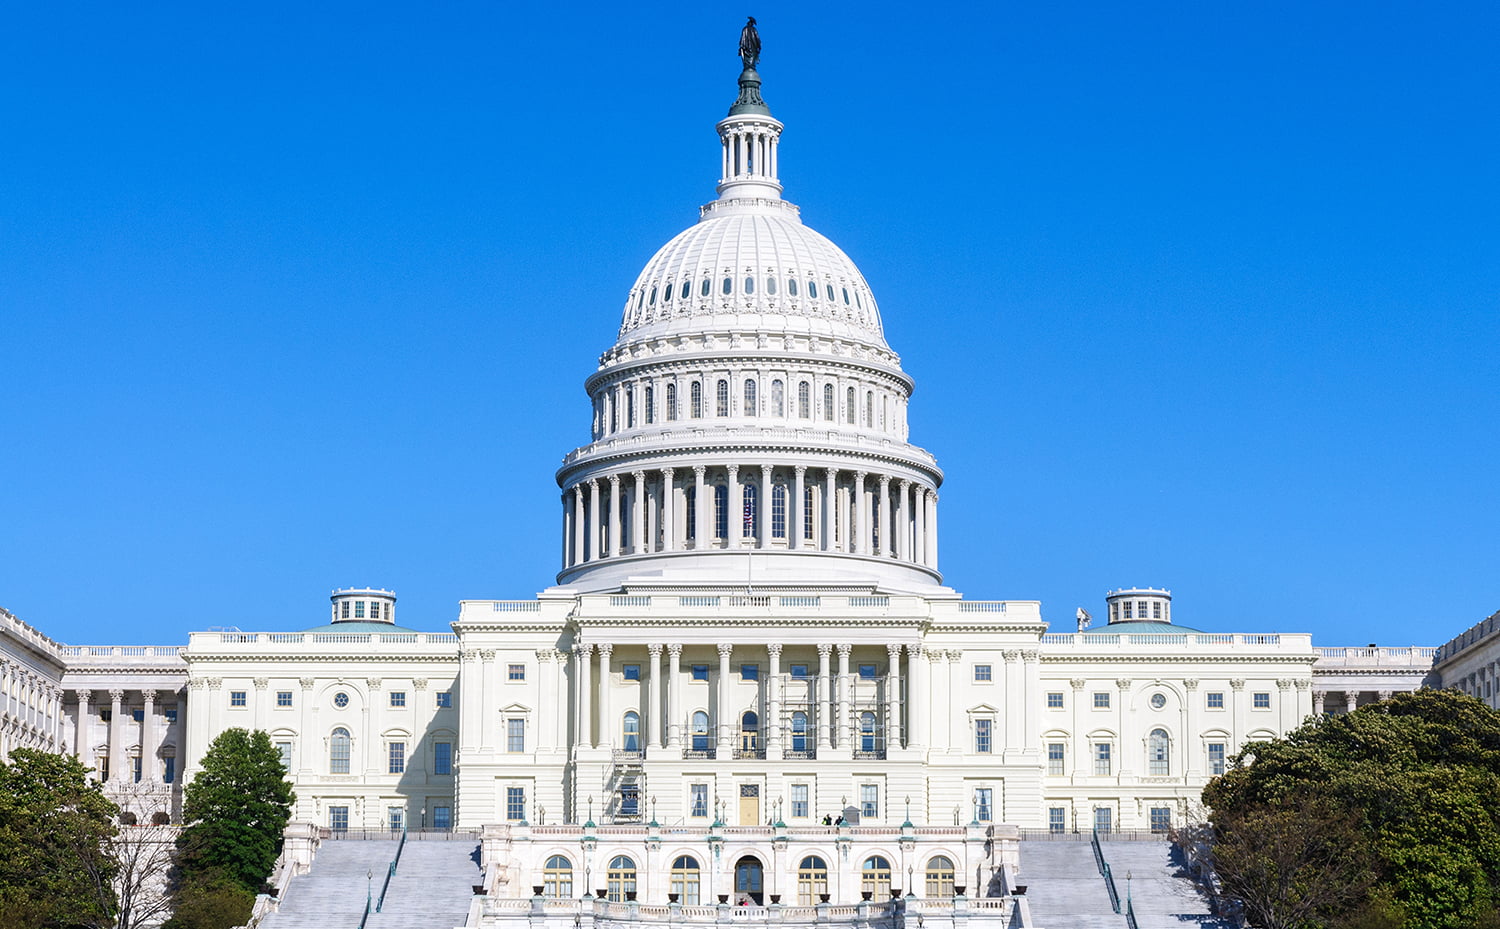 The U.S. Capitol building in Washington, DC